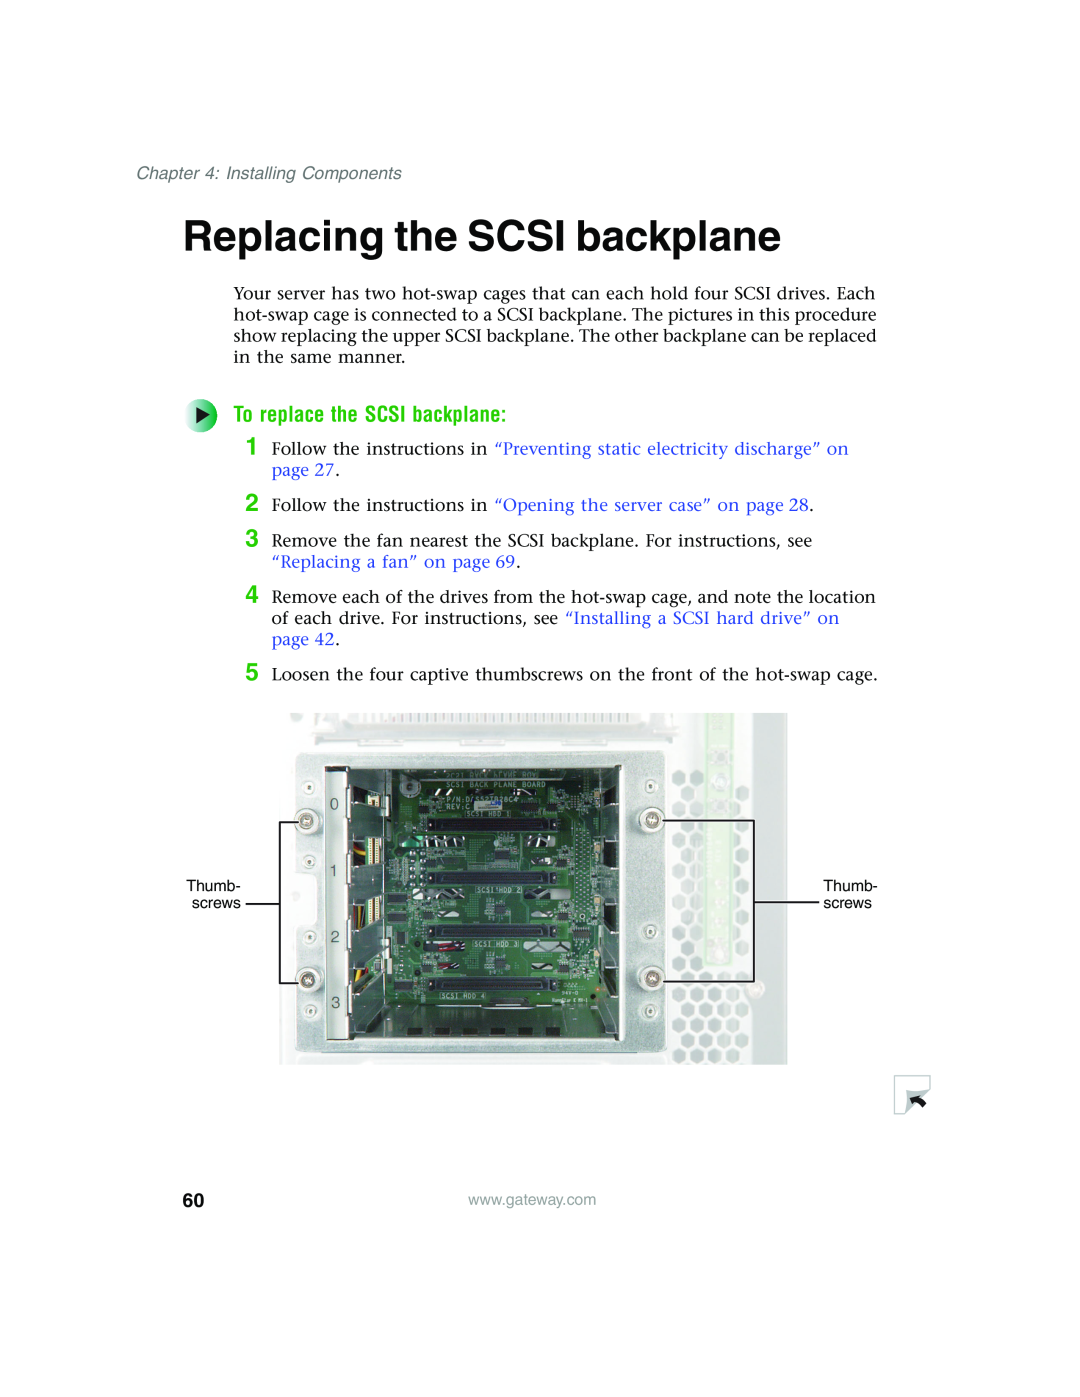 Gateway 980 manual Replacing the SCSI backplane, To replace the SCSI backplane, Installing Components 